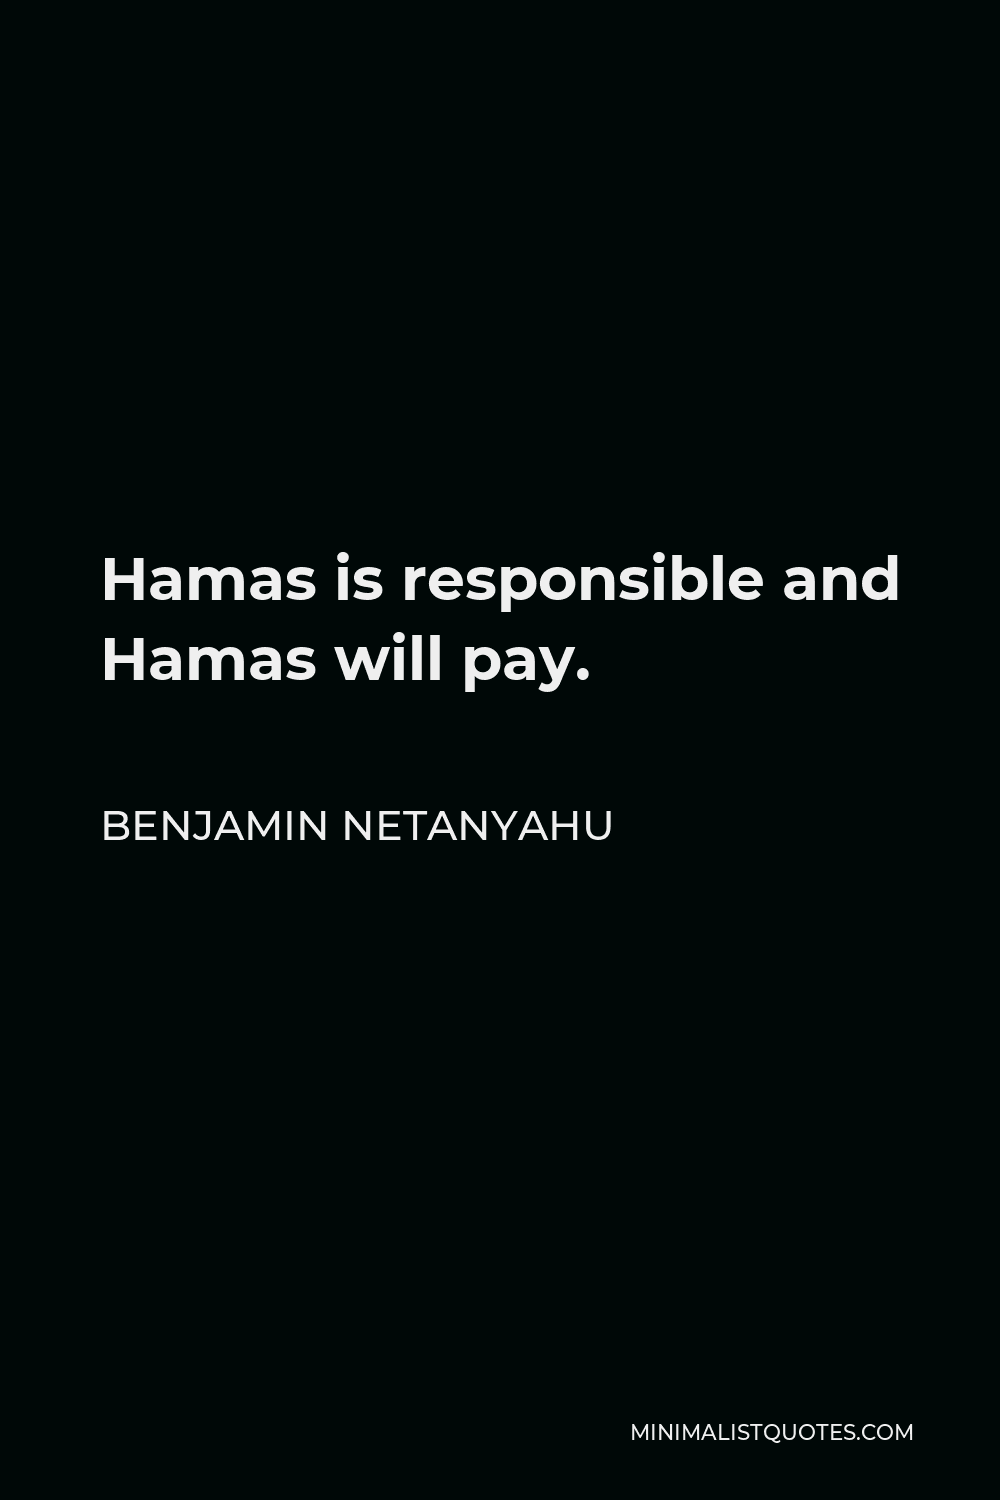 Benjamin Netanyahu Quote - Hamas is responsible and Hamas will pay.